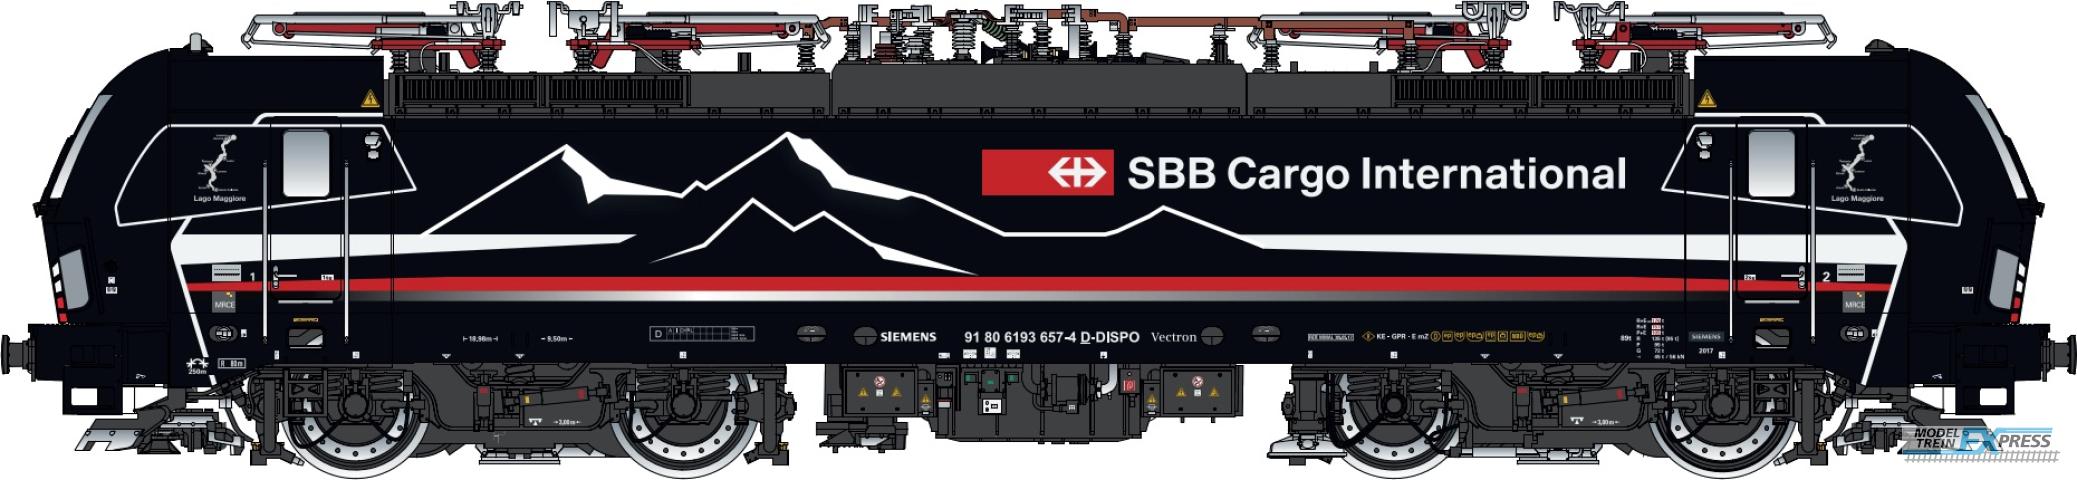 LS Models 17618S SBB Cargo/Shadowpiercer, 4 pantographs, Ep. VI (2019) 91 80 6193 657-4 D-DISPO  /  Ep. VI  /  ---  /  HO  /  AC SOUND  /  1 P.